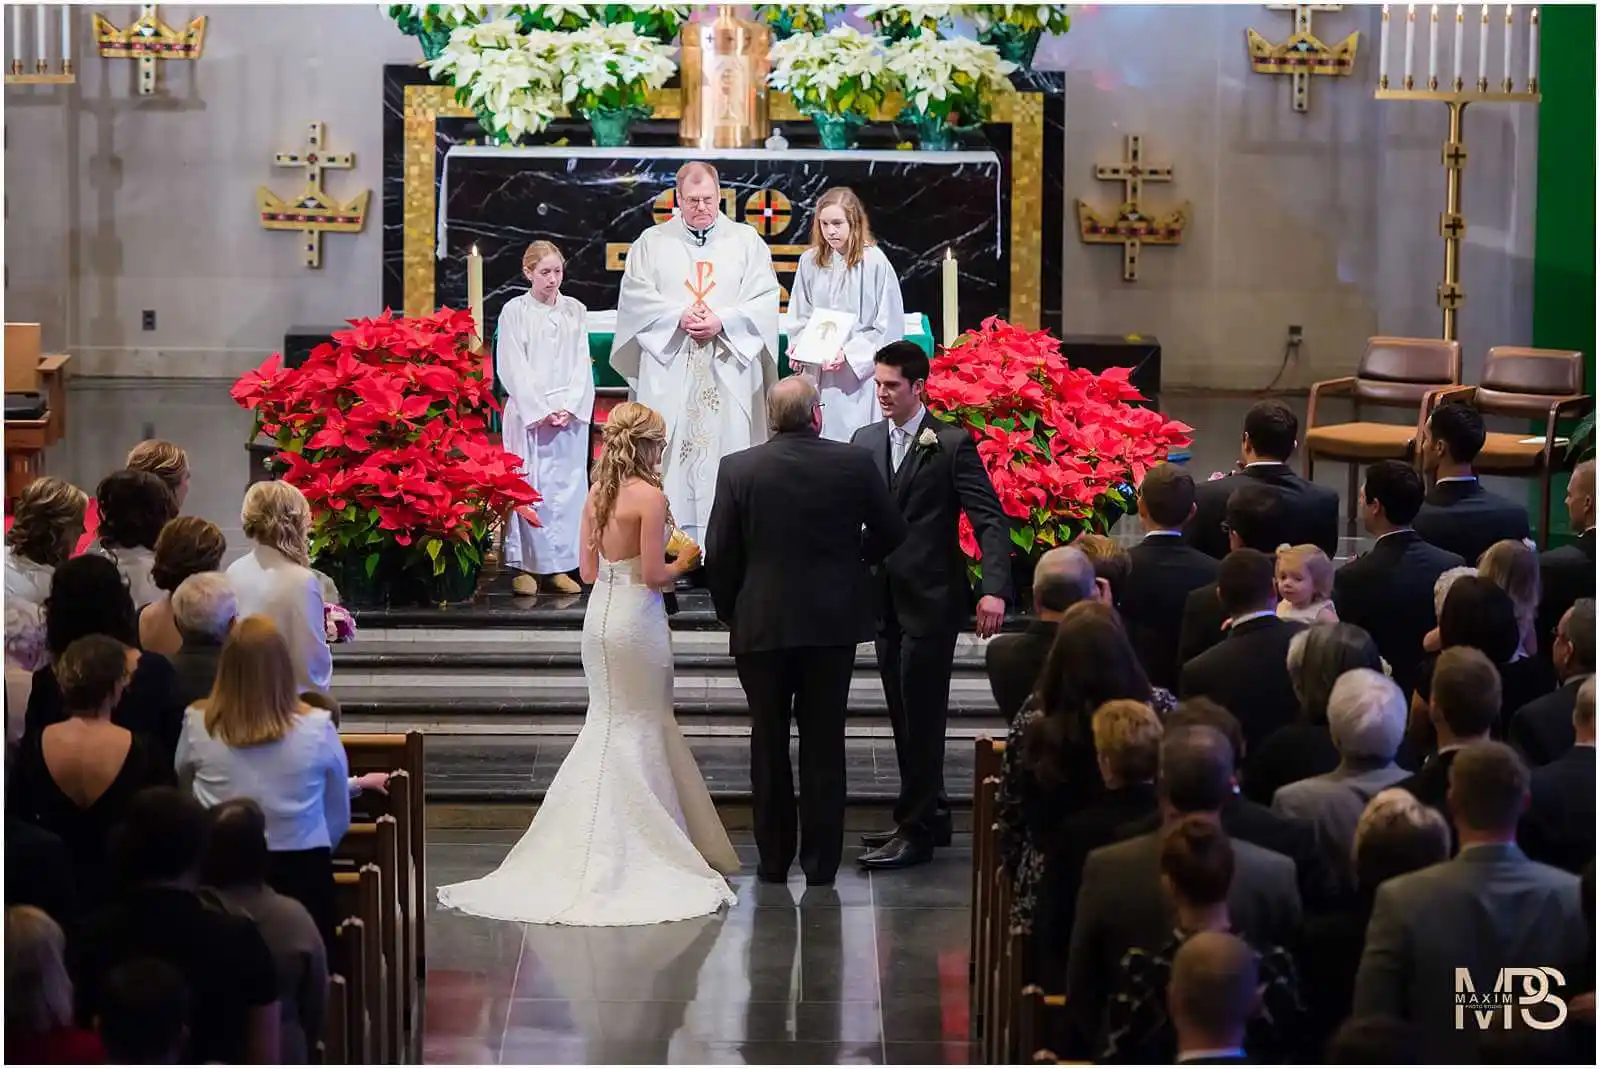 Cincinnati church wedding scene with bride, groom, and guests.